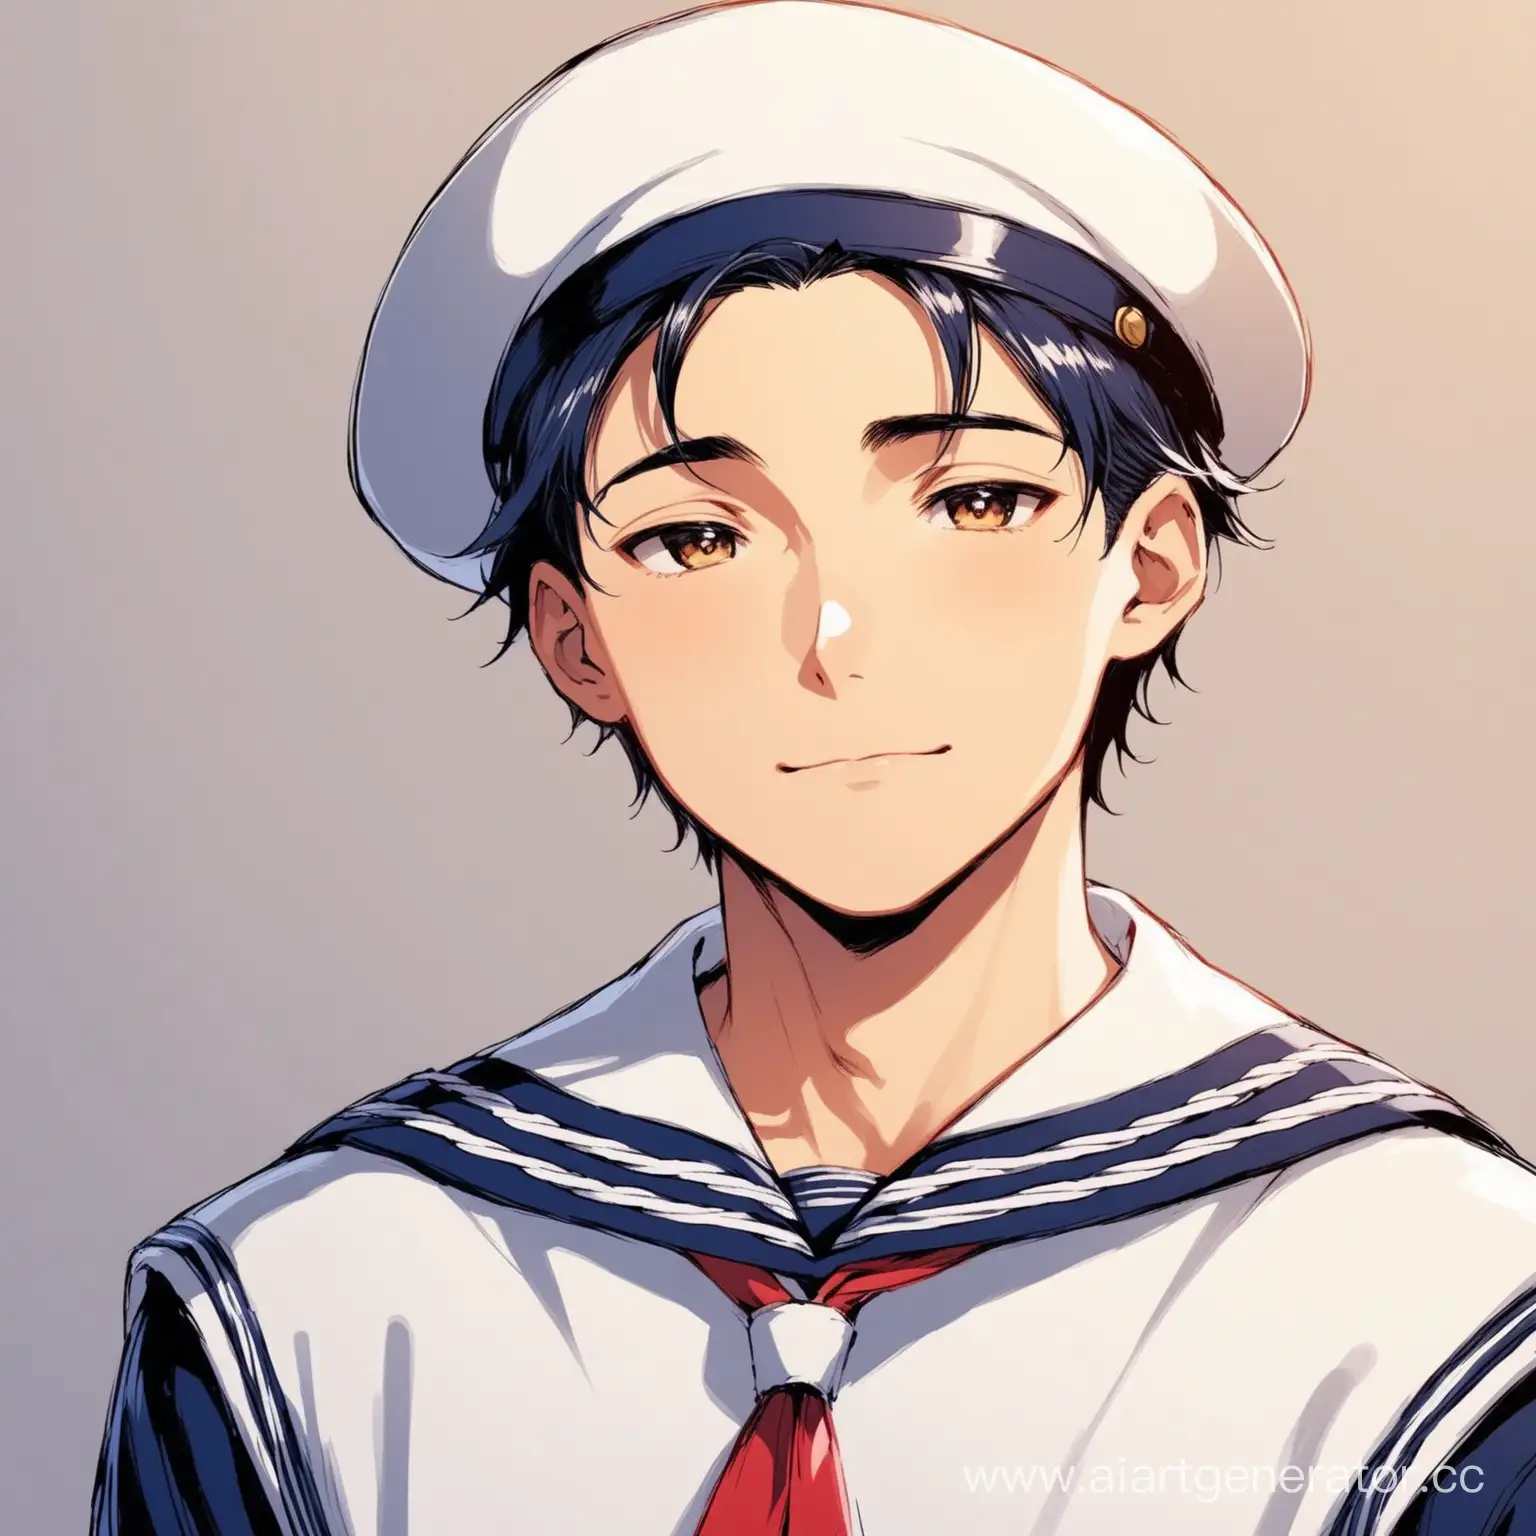 Sailor-Uniform-Guy-Exploring-Coastal-Beauty